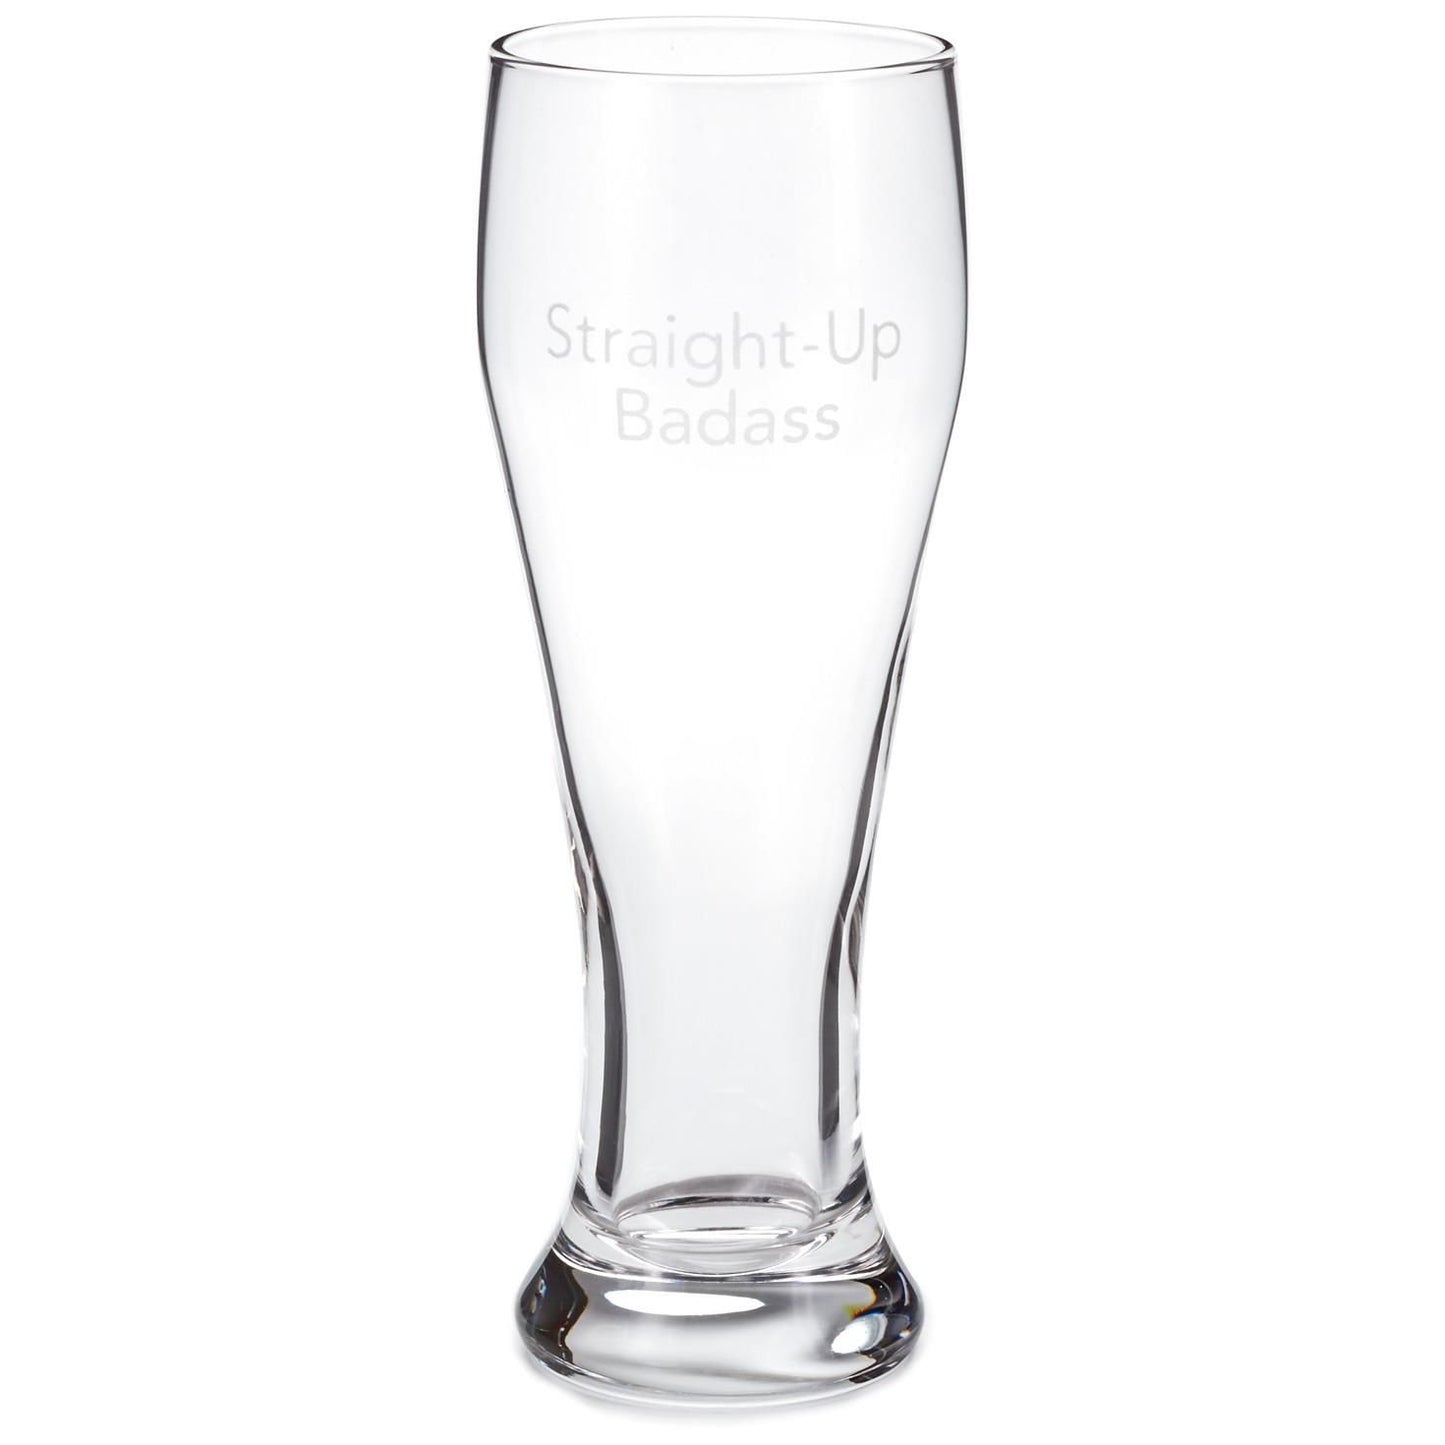 Straight-Up Badass Pilsner Glass, 17 oz. Tumblers